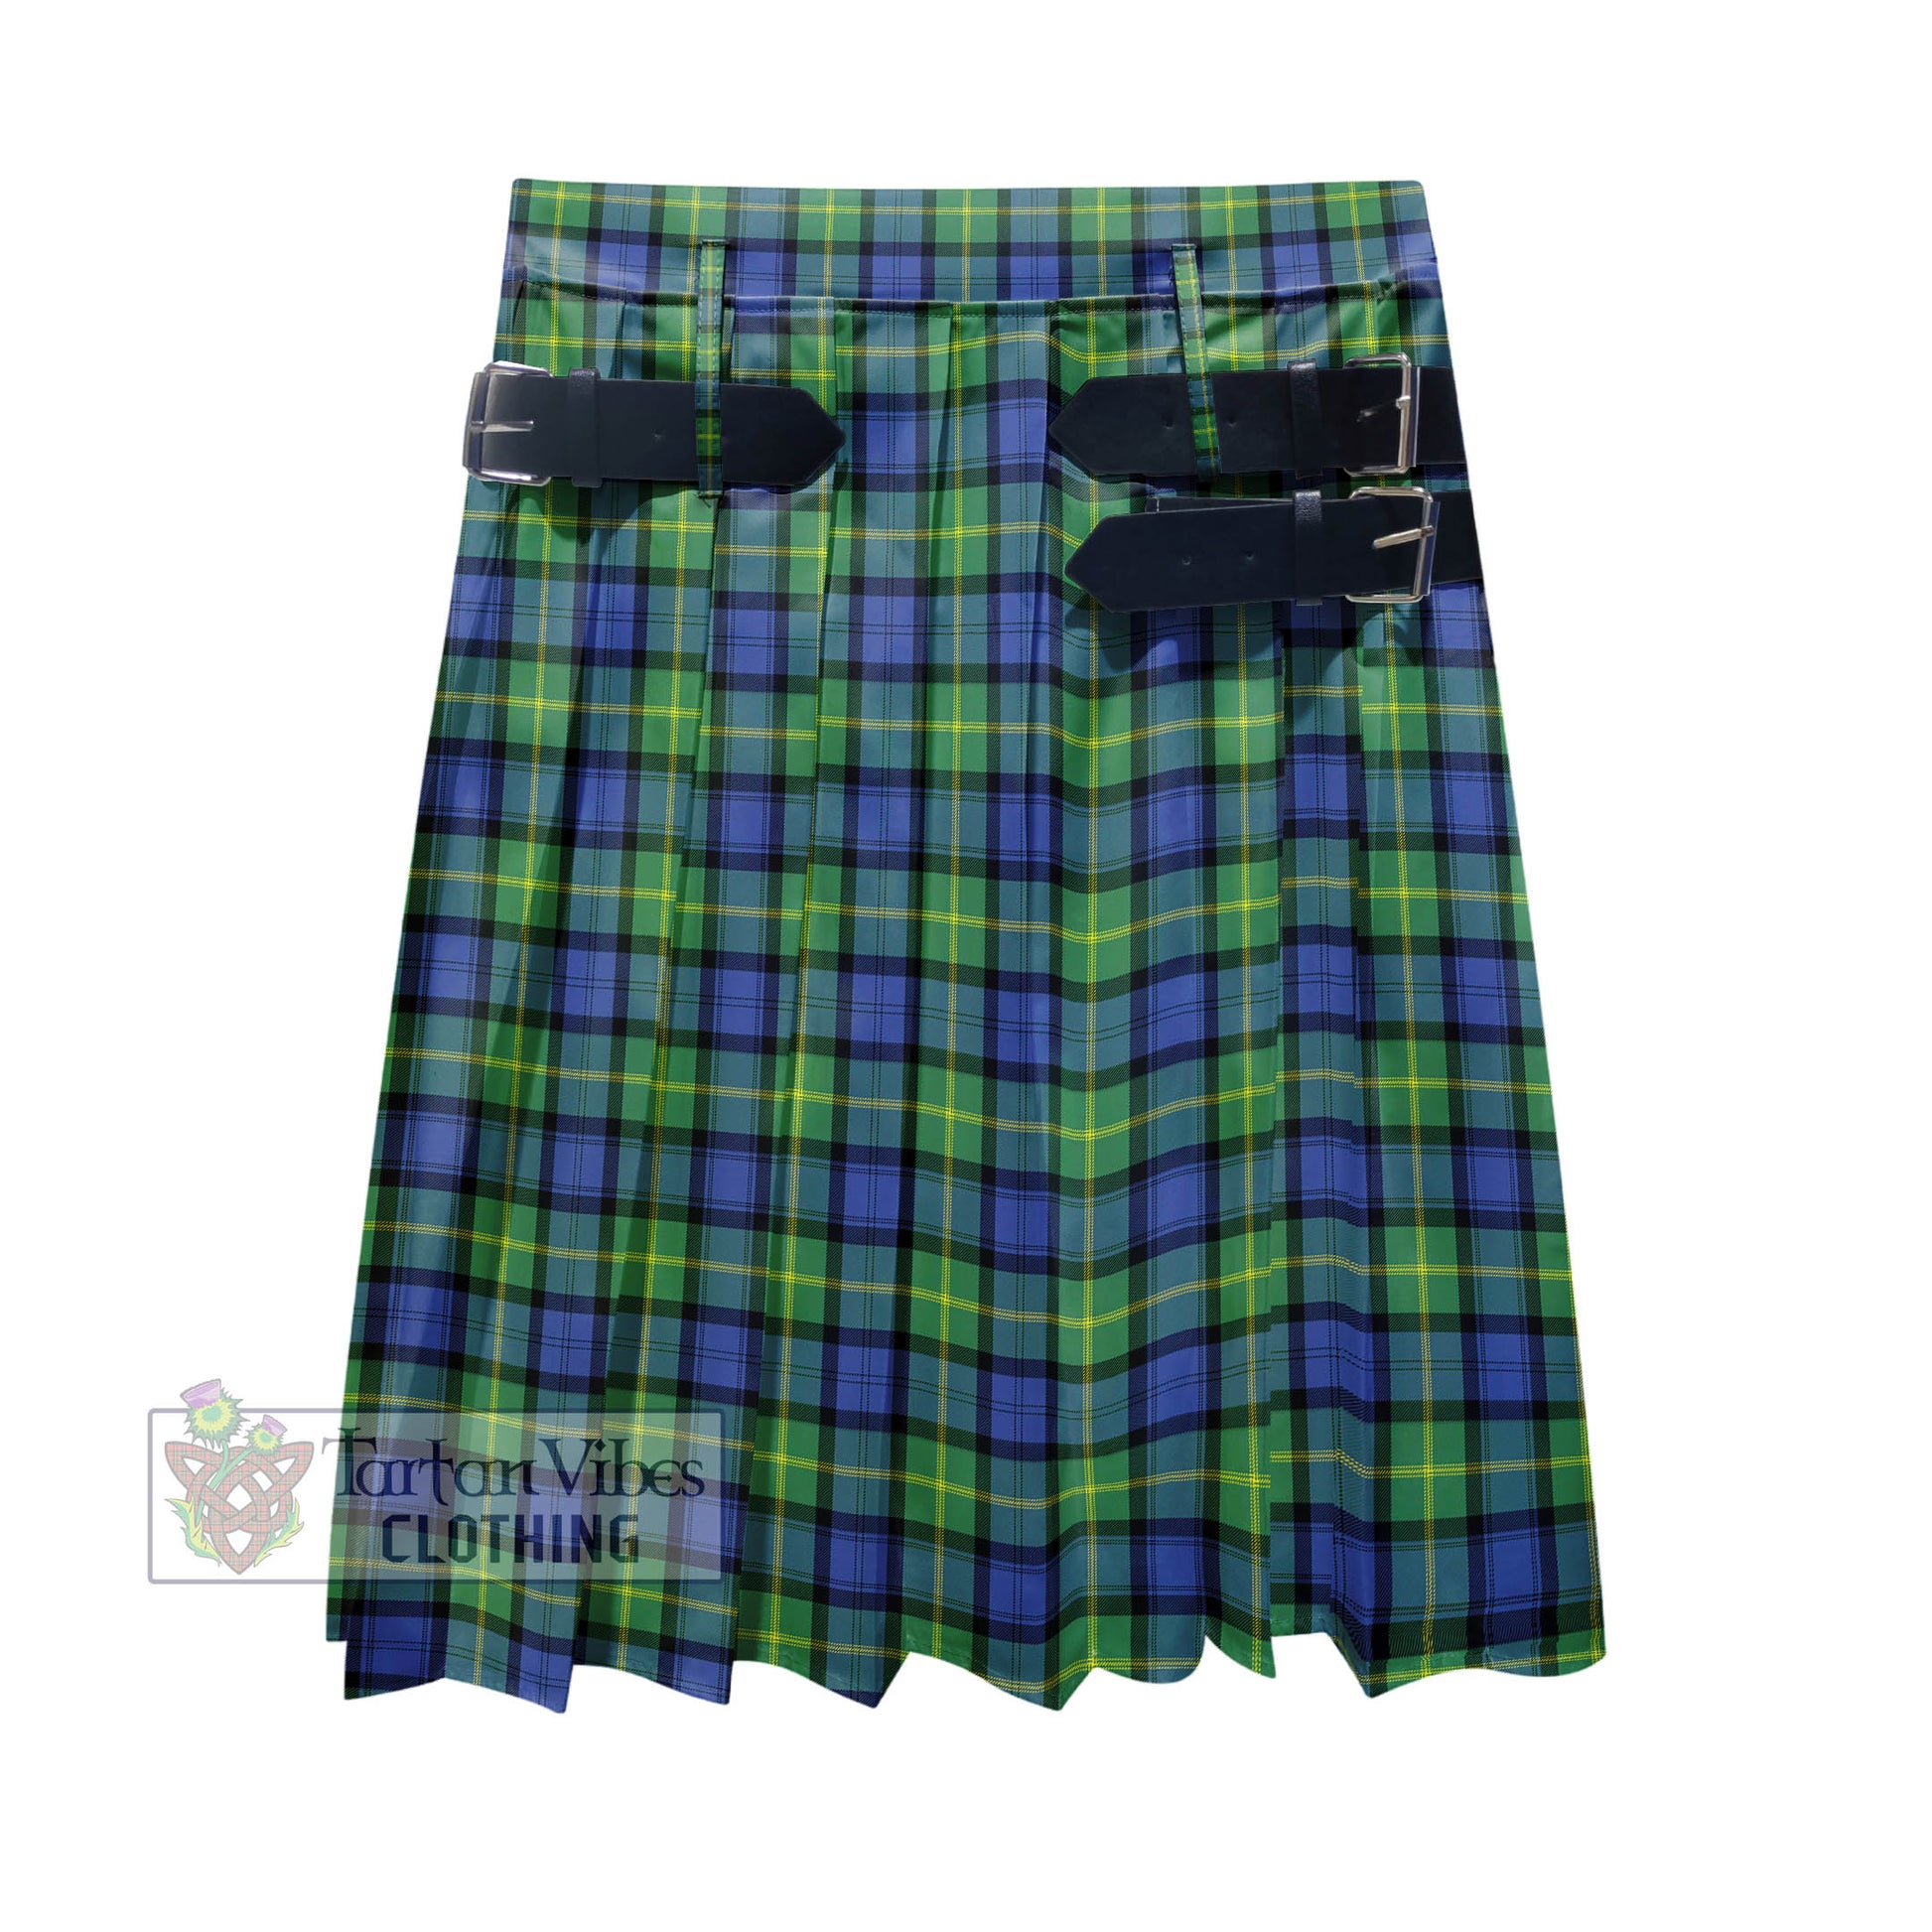 Tartan Vibes Clothing Gordon Old Ancient Tartan Men's Pleated Skirt - Fashion Casual Retro Scottish Style